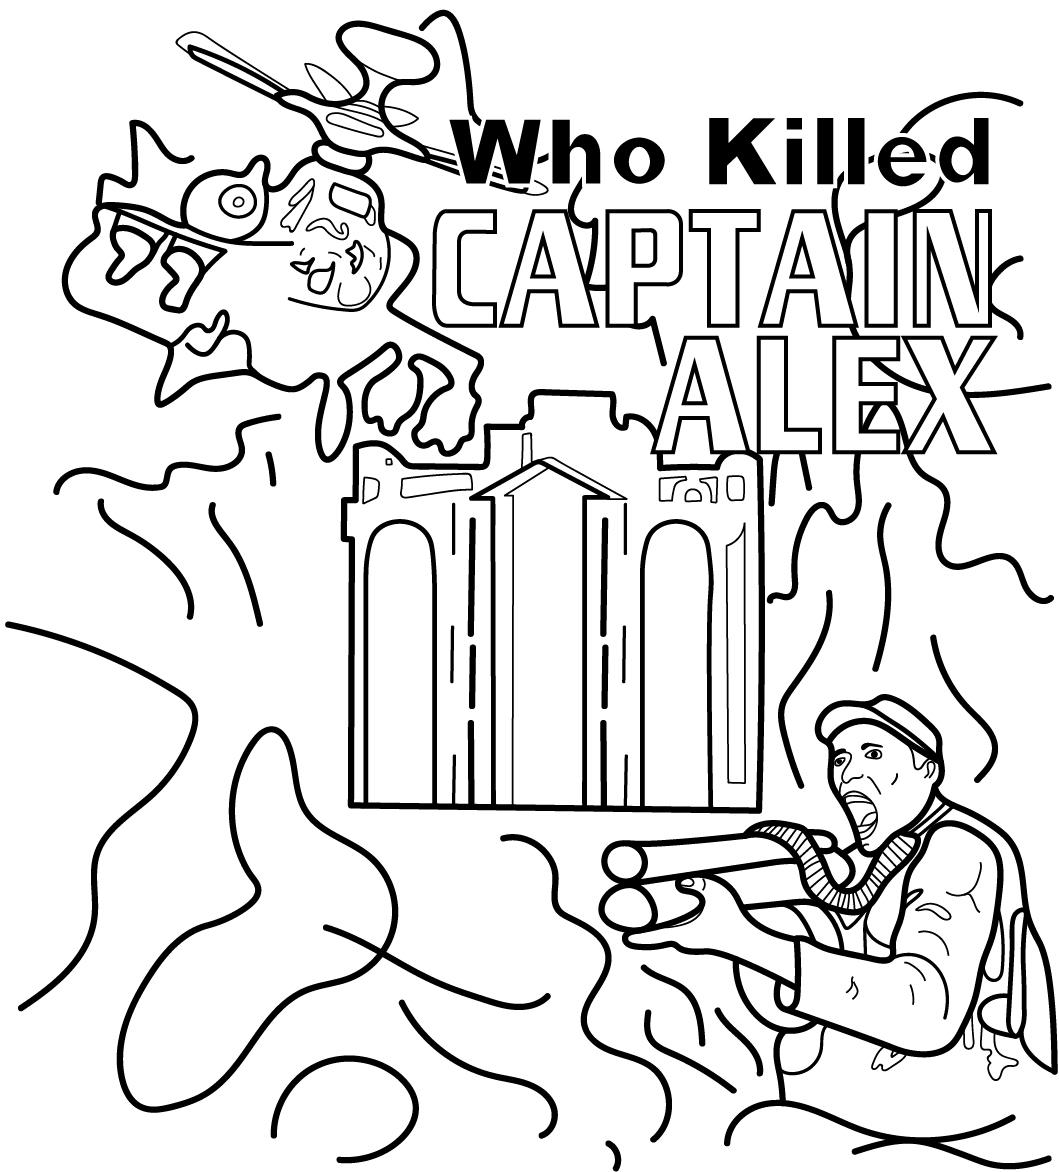 Image of Digital Transformational Sketch by Marizela Garza of the original artwork: “Who Killed Captain Alex?” movie poster